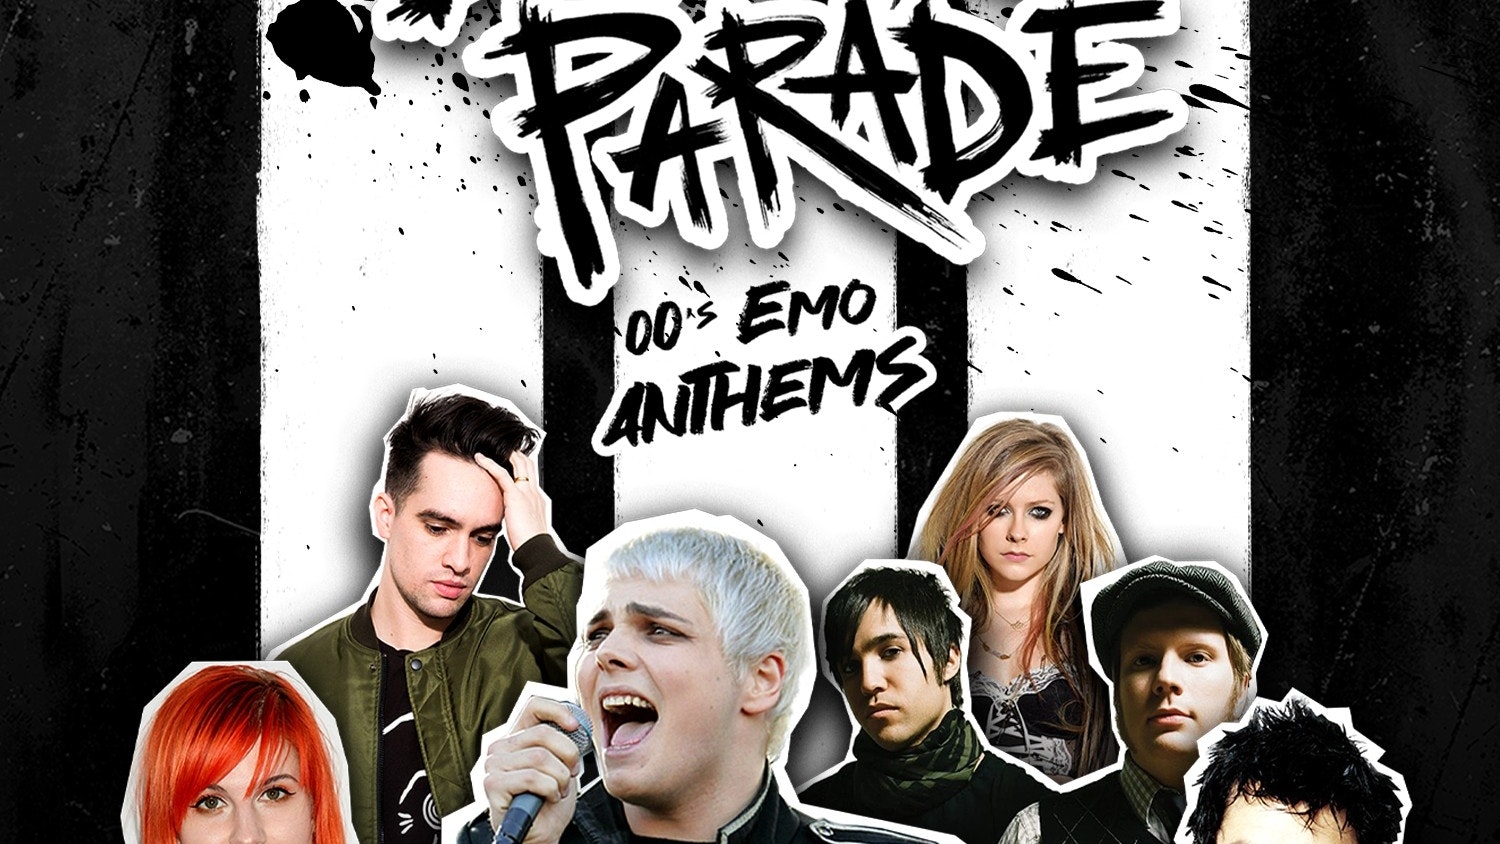 Black Parade – 00’s Emo Anthems – Saturday 13th April 2024 | Sunbird Records, Darwen